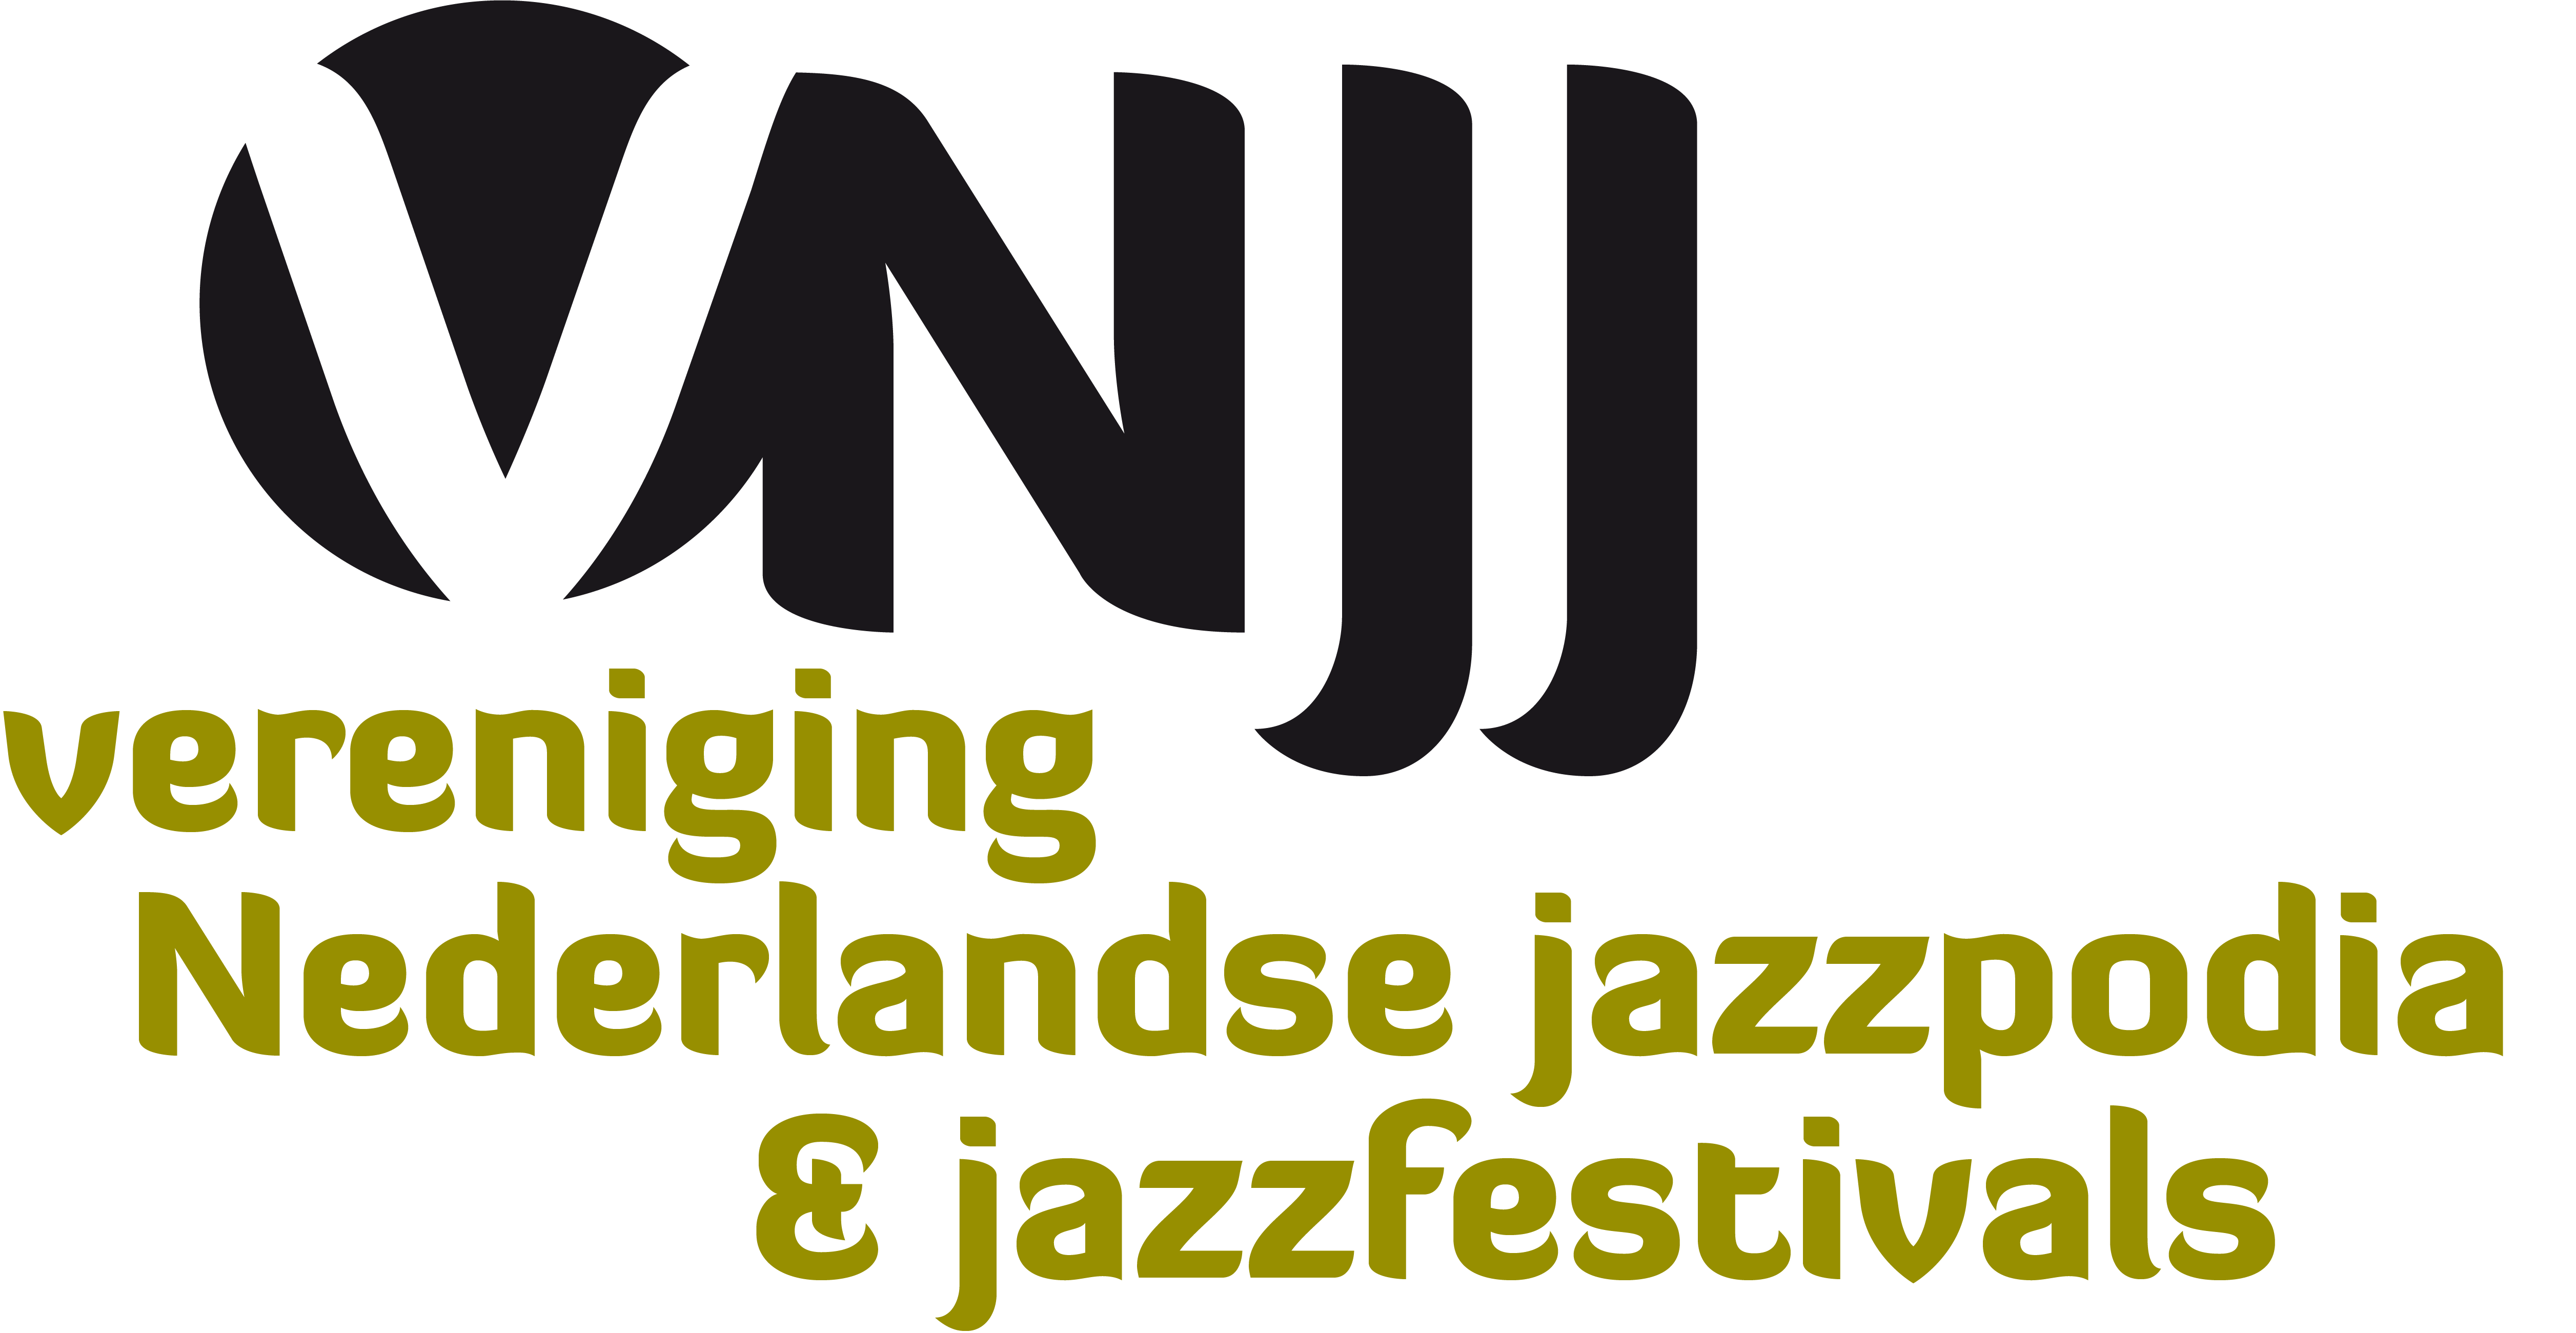 Jazzpodia en -festivals bundelen de kracht in VNJJ